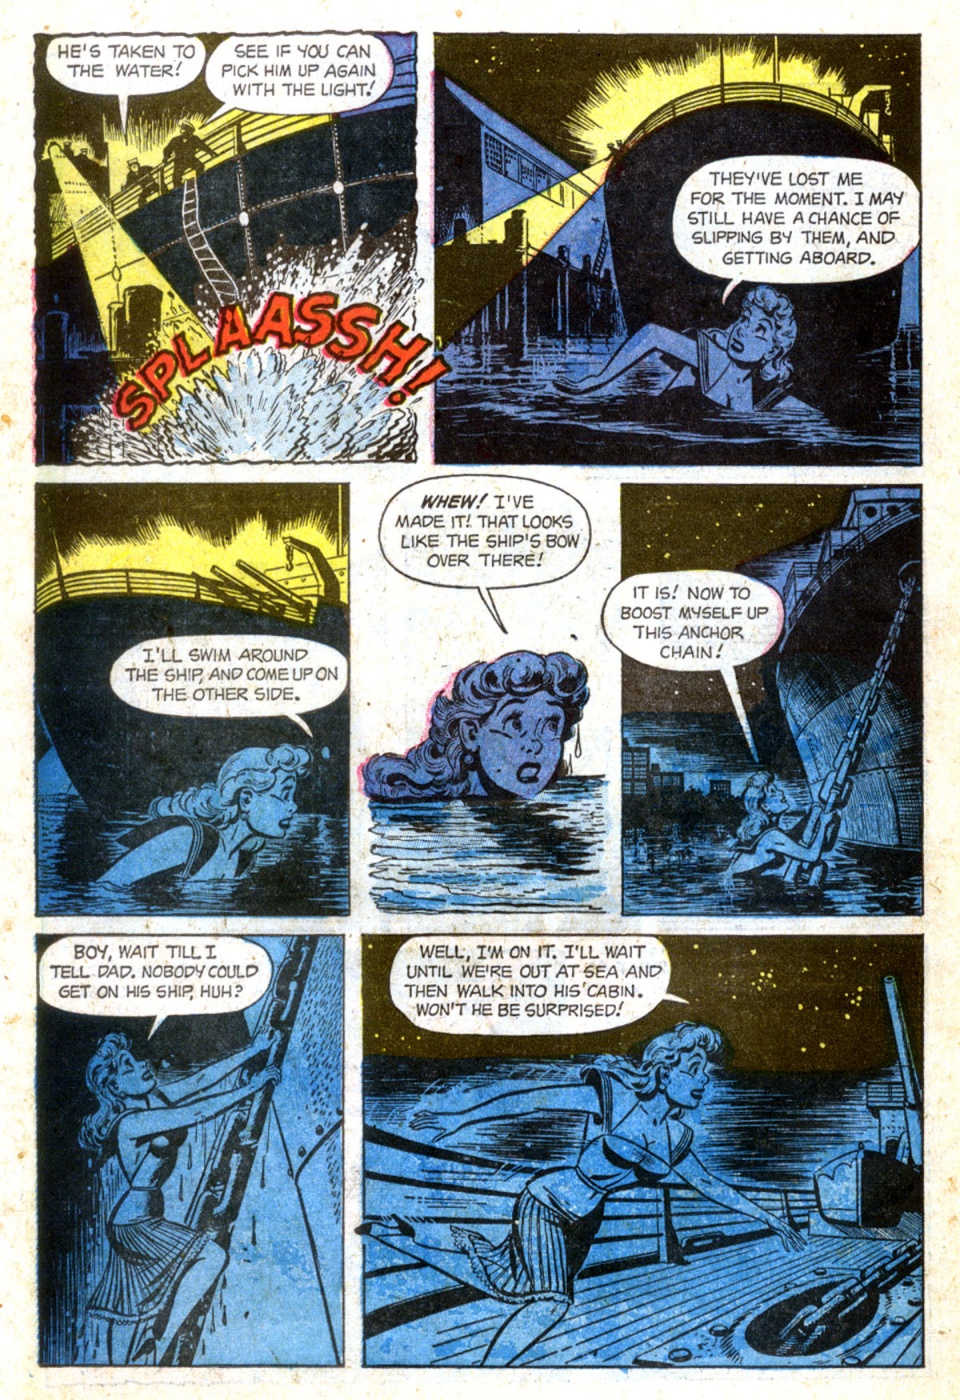 Anchors the Salt Water Daffy - Comics (c) (24)